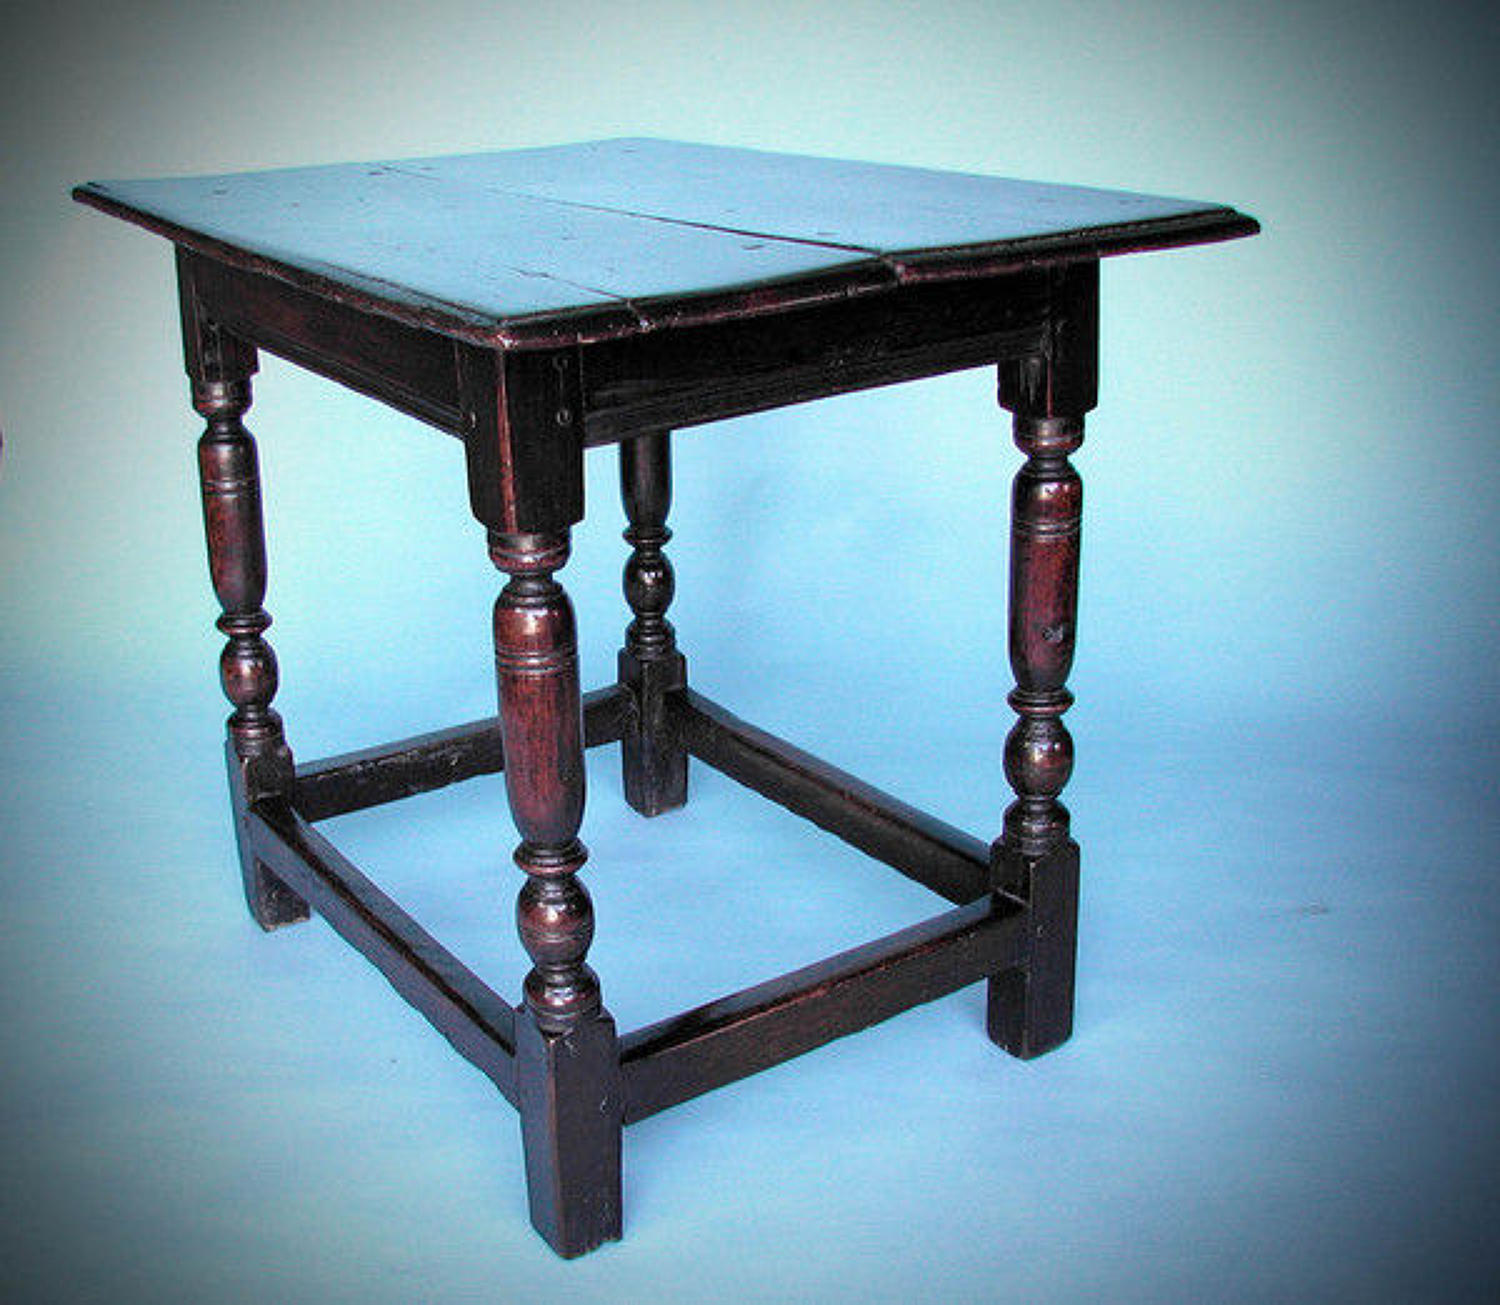 Rare 17thc Charles 1 Antique Oak Centre Table . English. C1620-40.